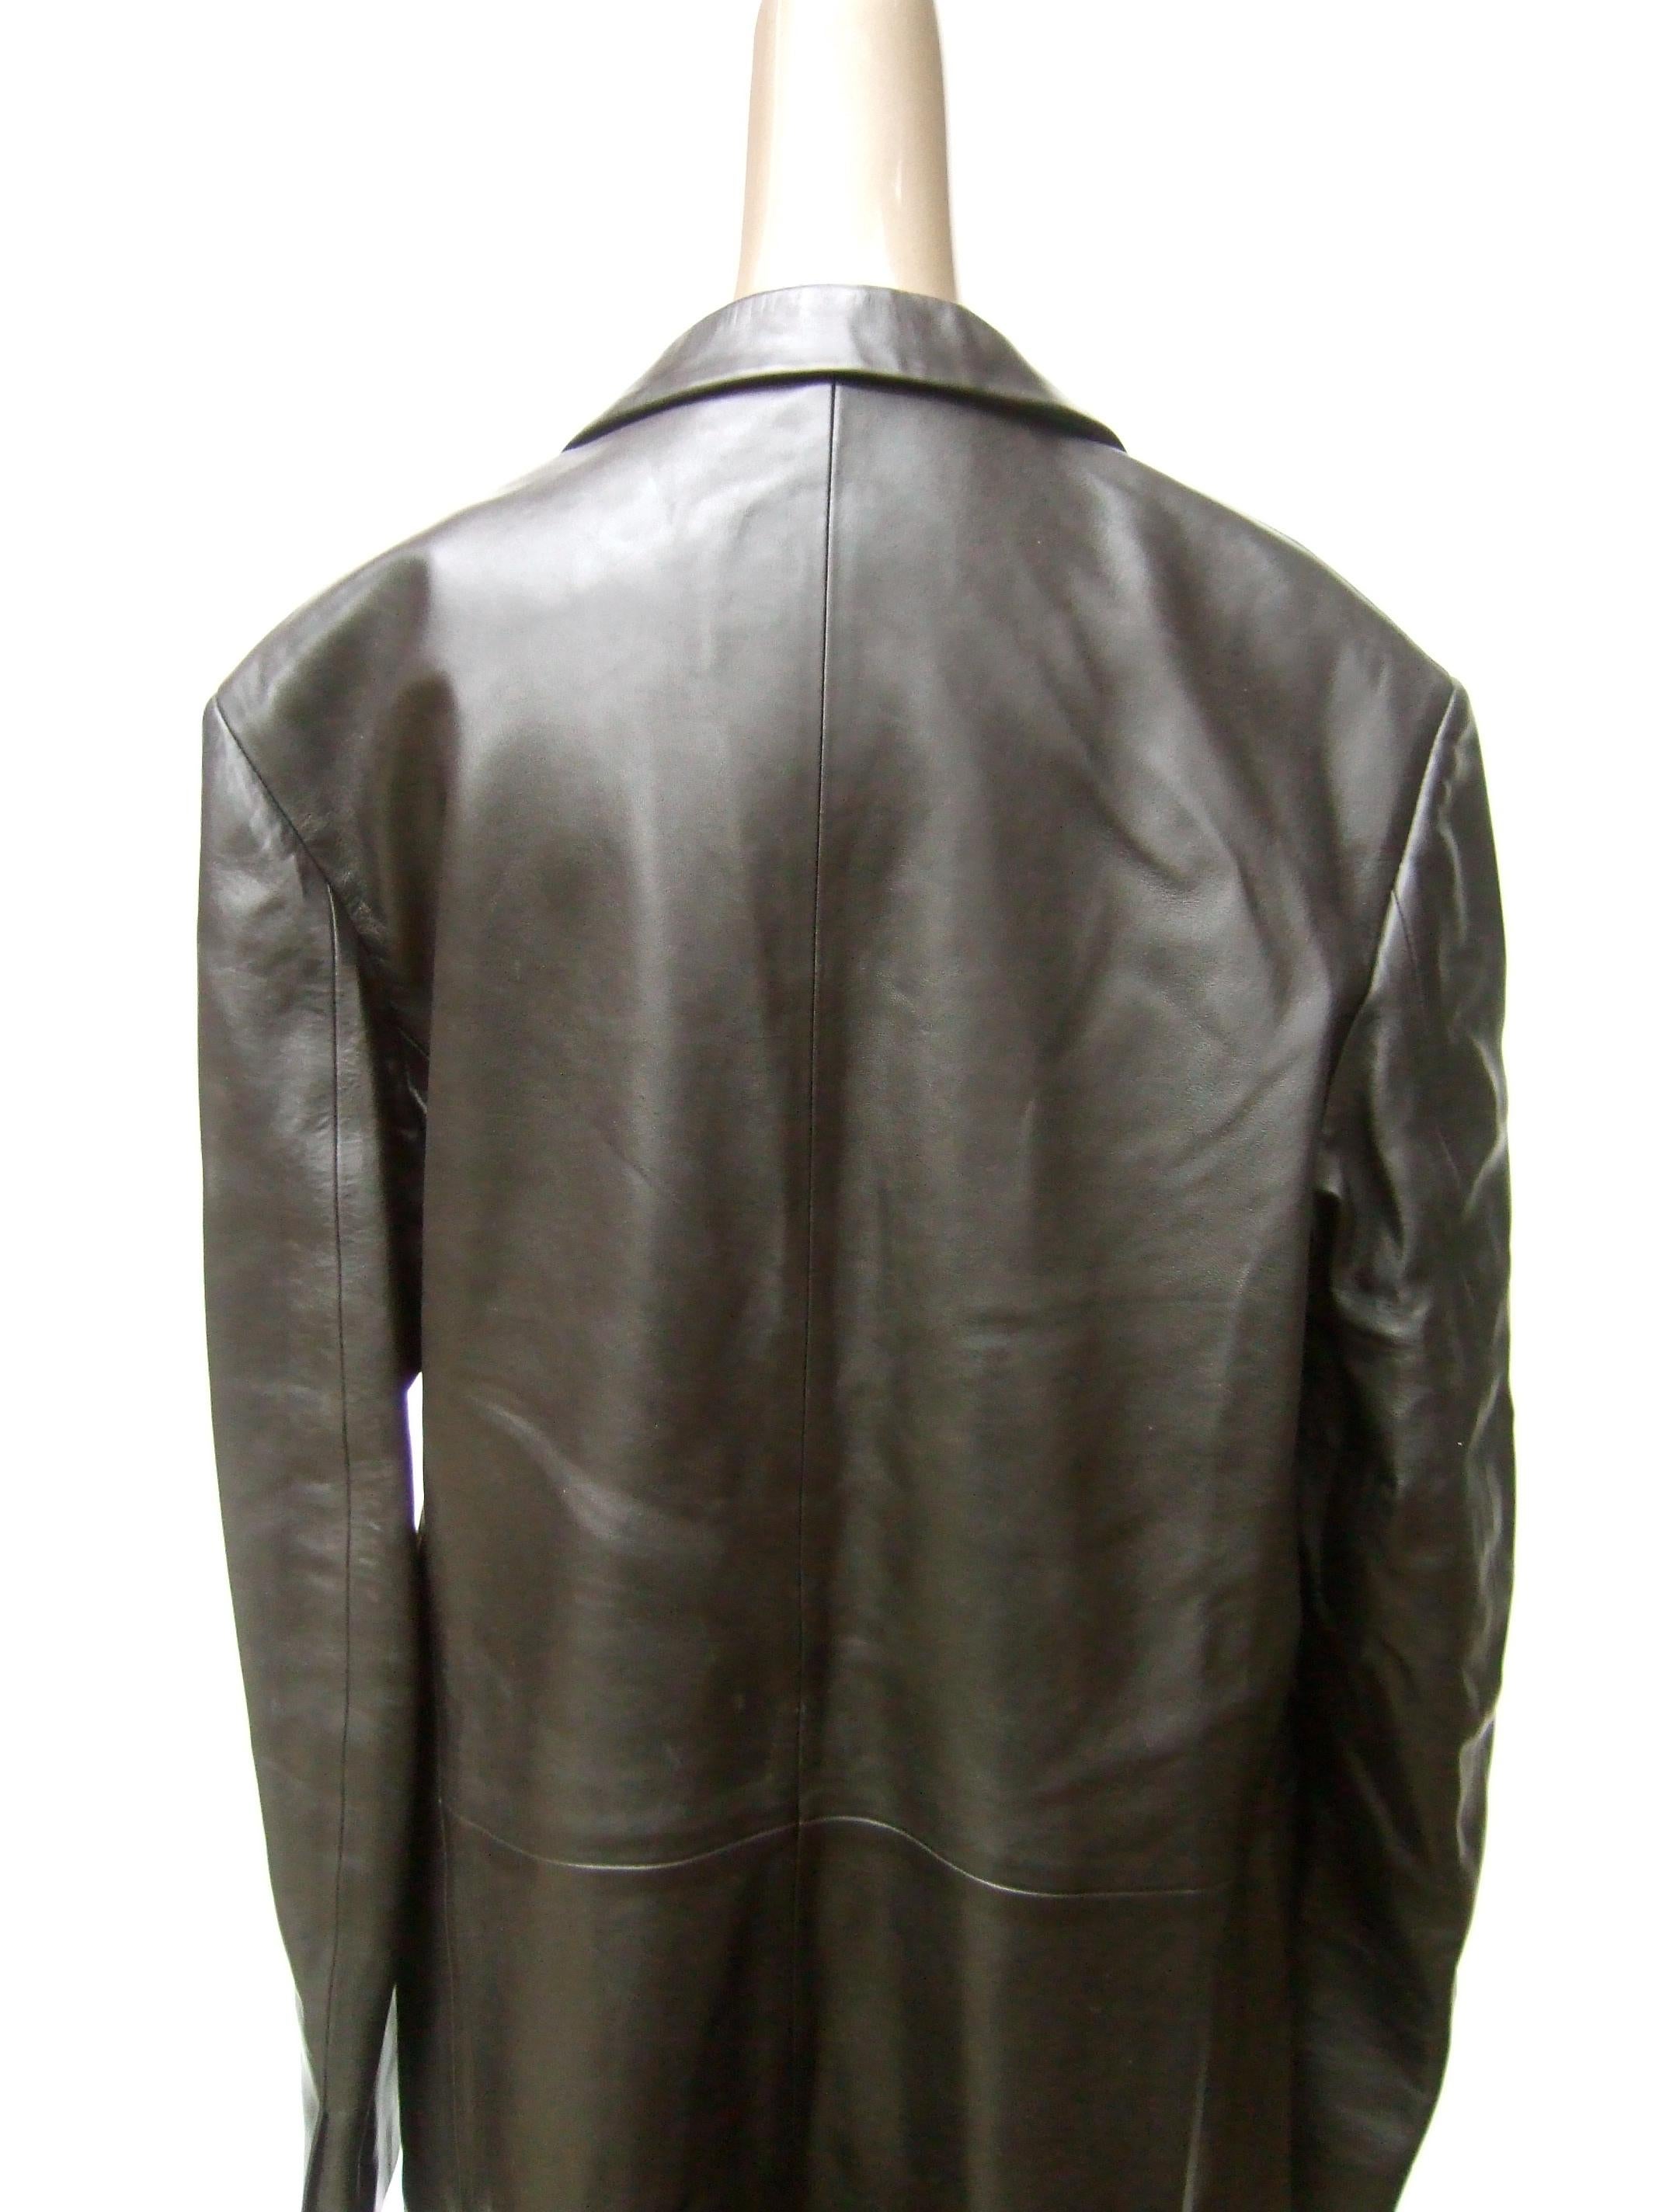 Hermes Men's Buttery Soft Black Lambskin Leather Unisex Coat Size 54 c 21st c  For Sale 9